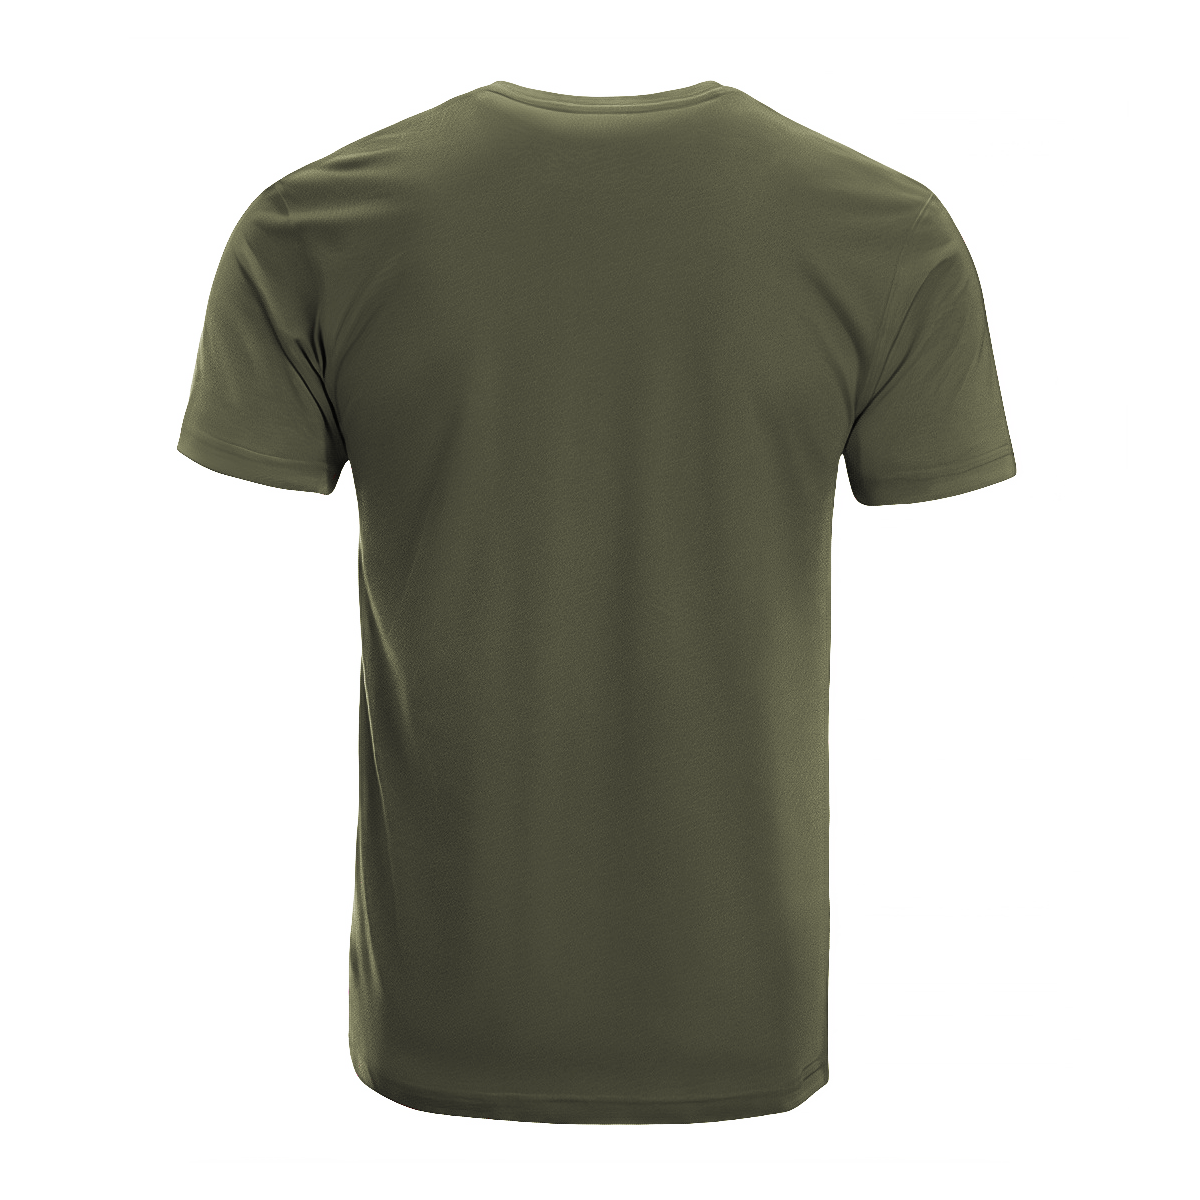 Sandilands Tartan Crest T-shirt - I'm not yelling style